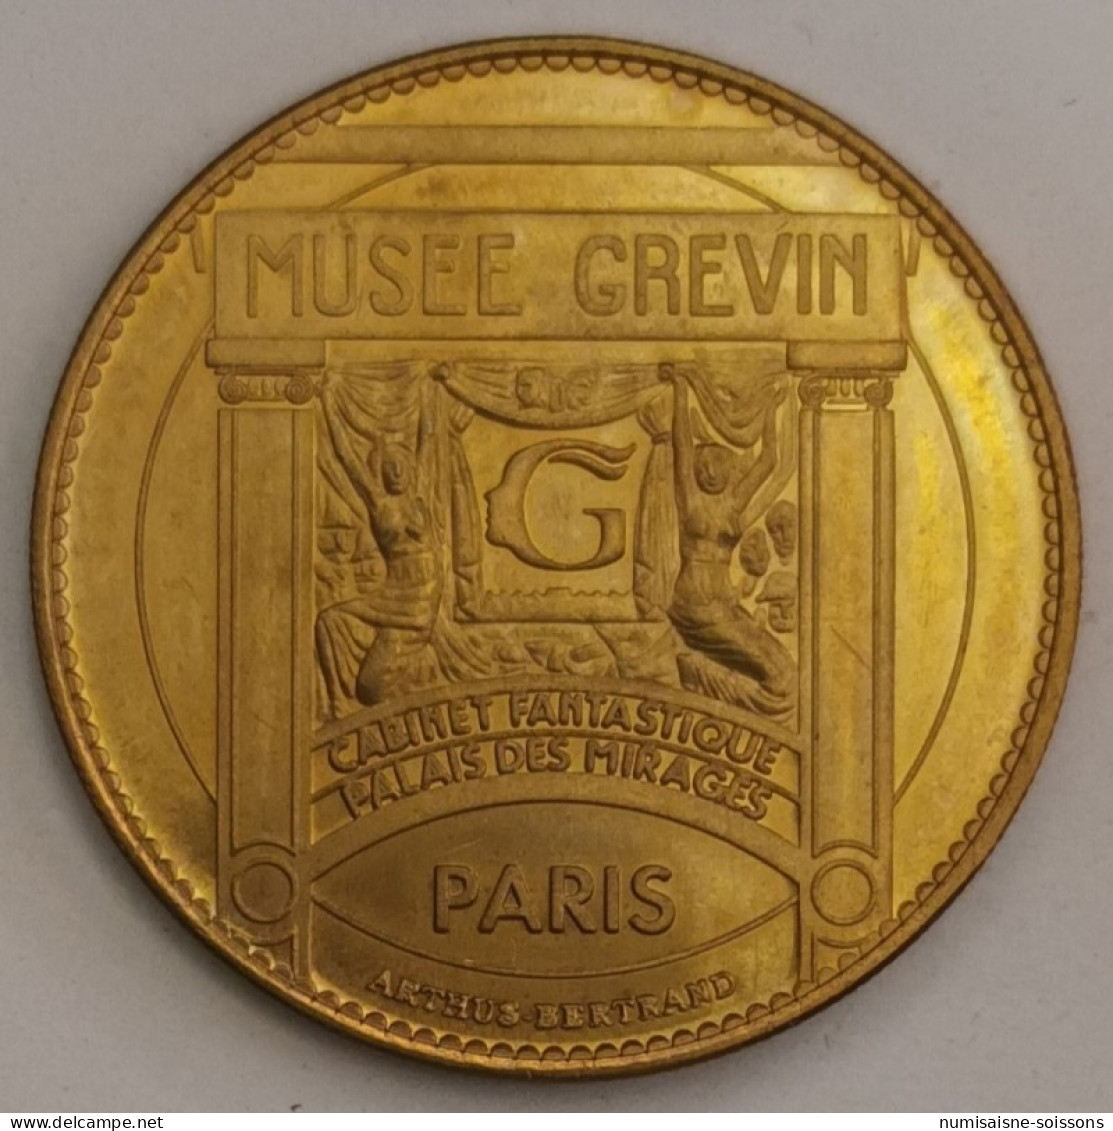 75 - PARIS - MUSEE GRÉVIN - MIMIE MATHY - ARTHUS BERTRAND - Ohne Datum